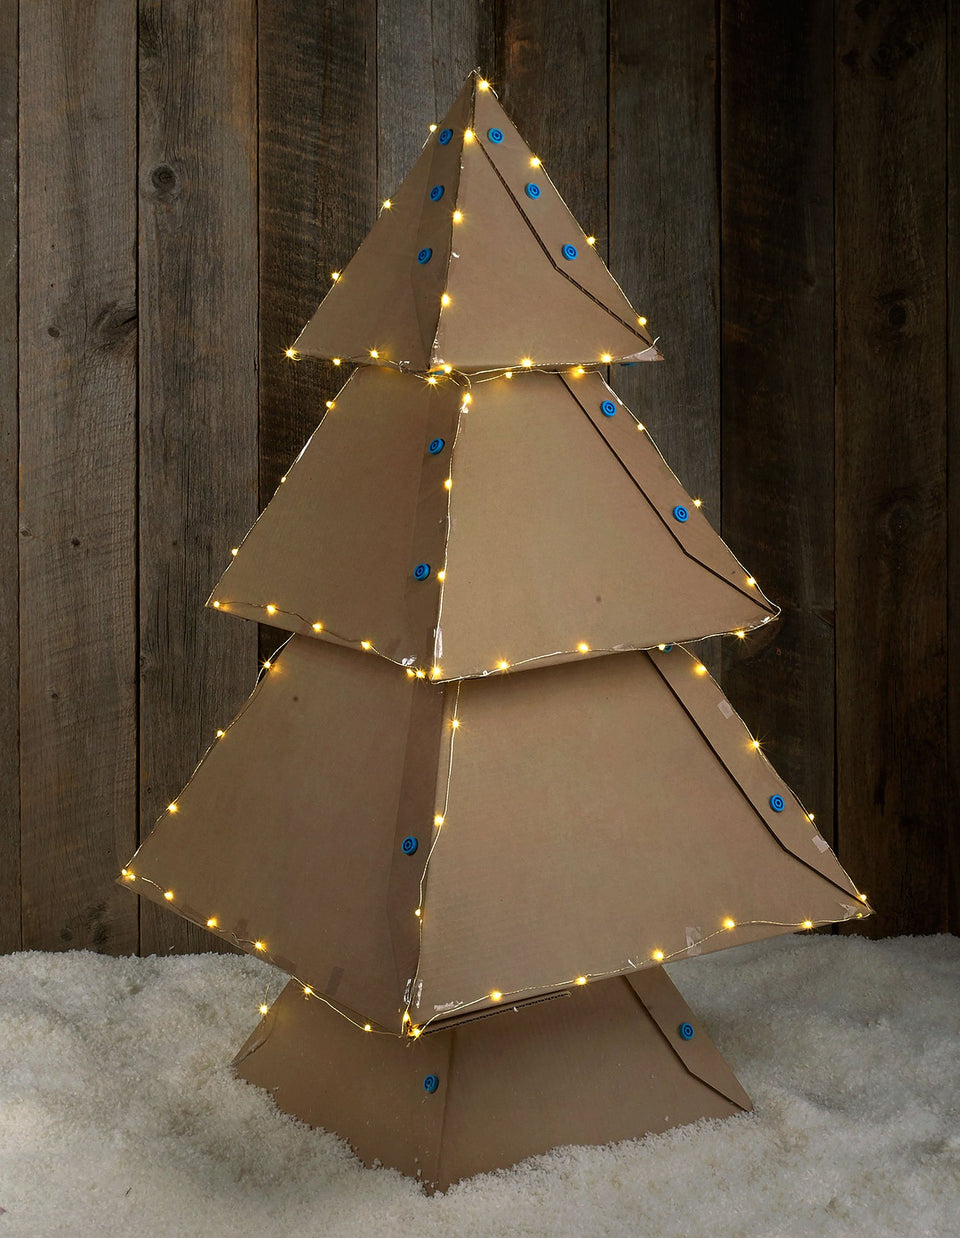 How To Make a Cardboard Christmas Tree